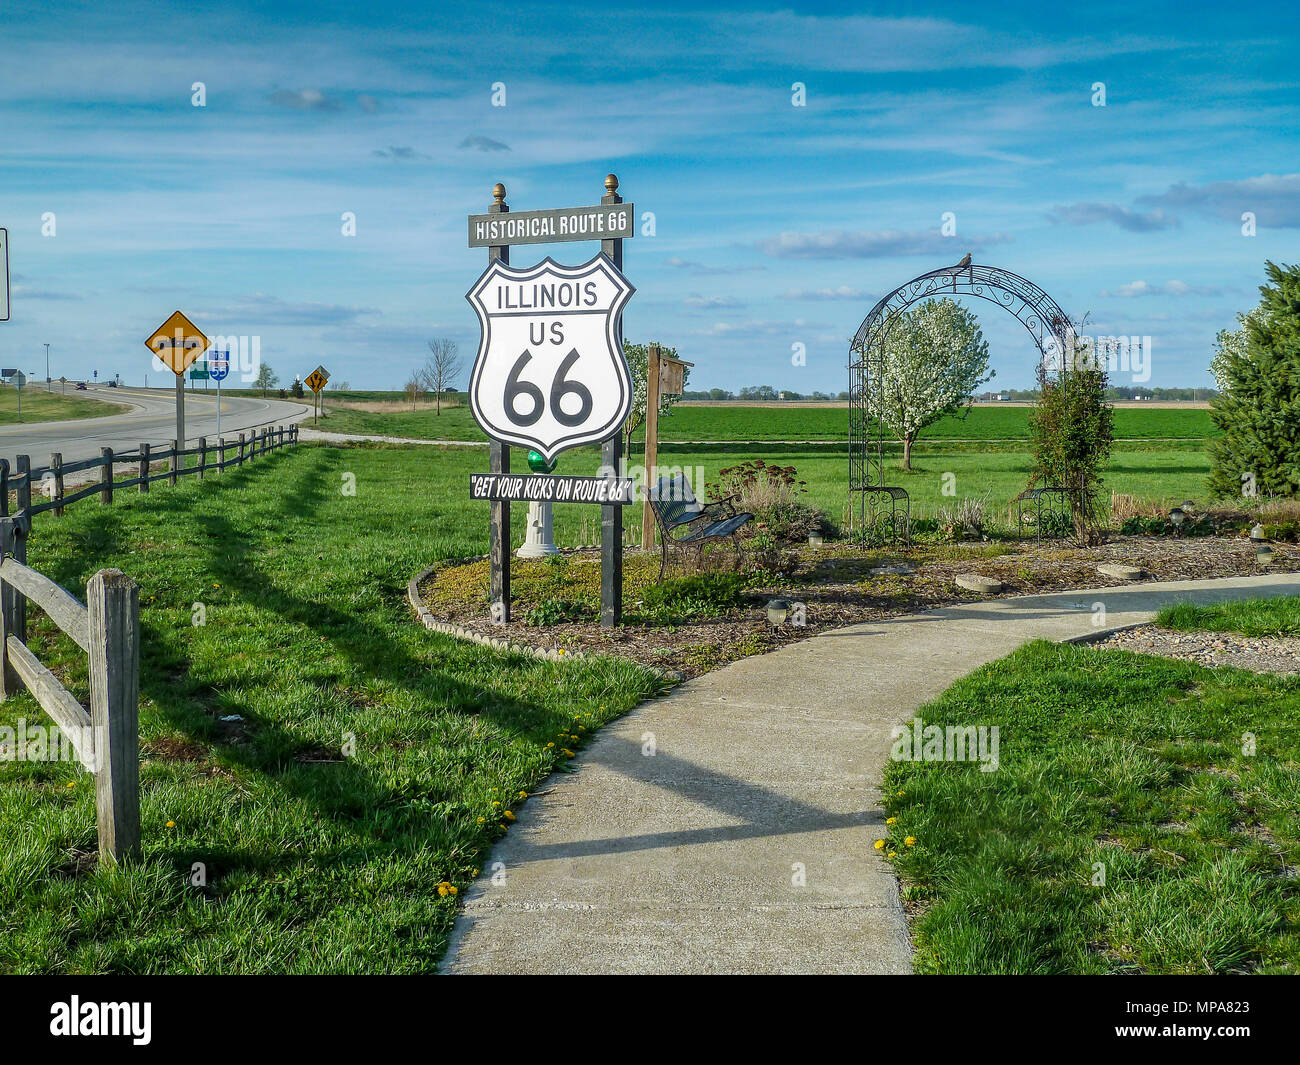 Historische Route 66 sign in Illinois Stockfoto